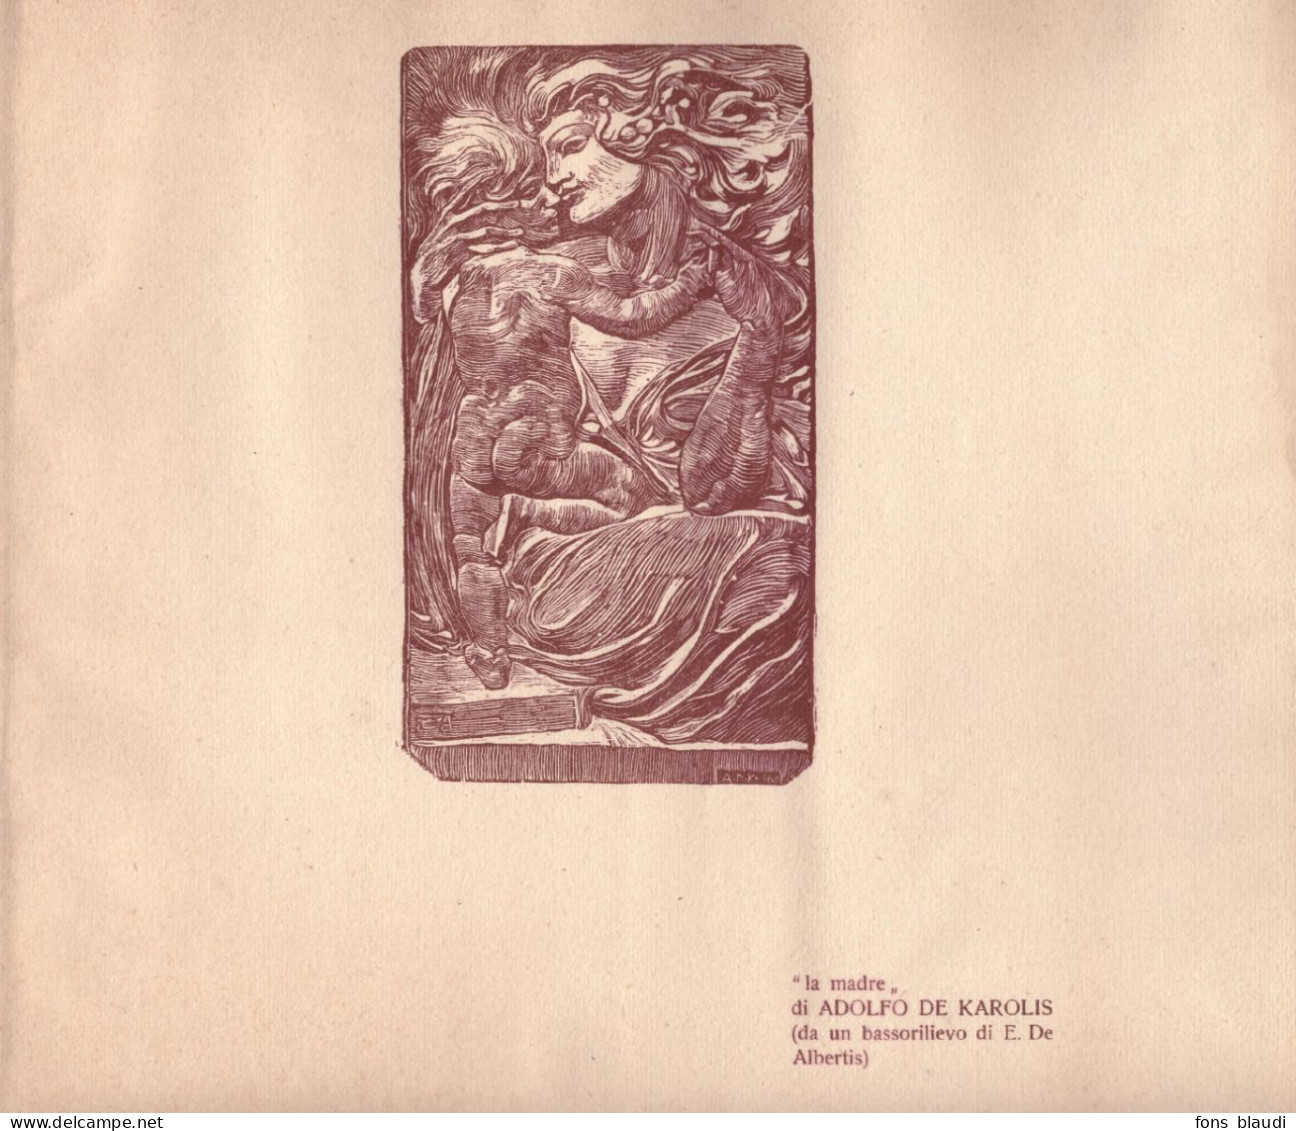 1912 - Xylographie Originale - Adolfo De Karolis (Montefiore Dell'Aso 1874 - Rome 1928) - La Madre - Estampes & Gravures